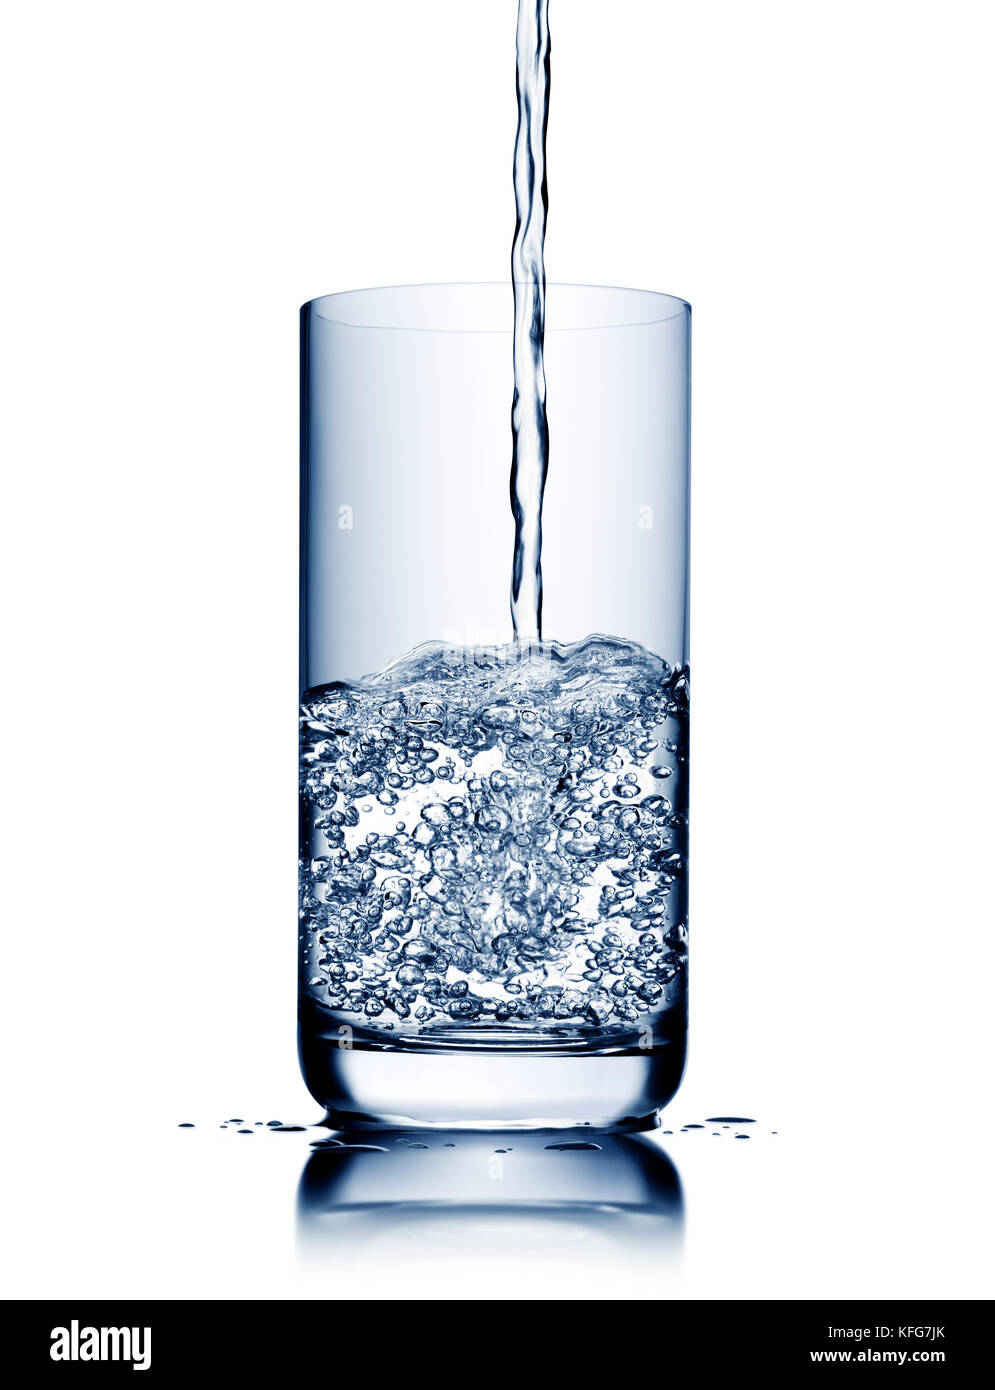 https://c8.alamy.com/comp/KFG7JK/water-pouring-and-splashing-into-half-full-half-empty-glass-with-reflection-KFG7JK.jpg